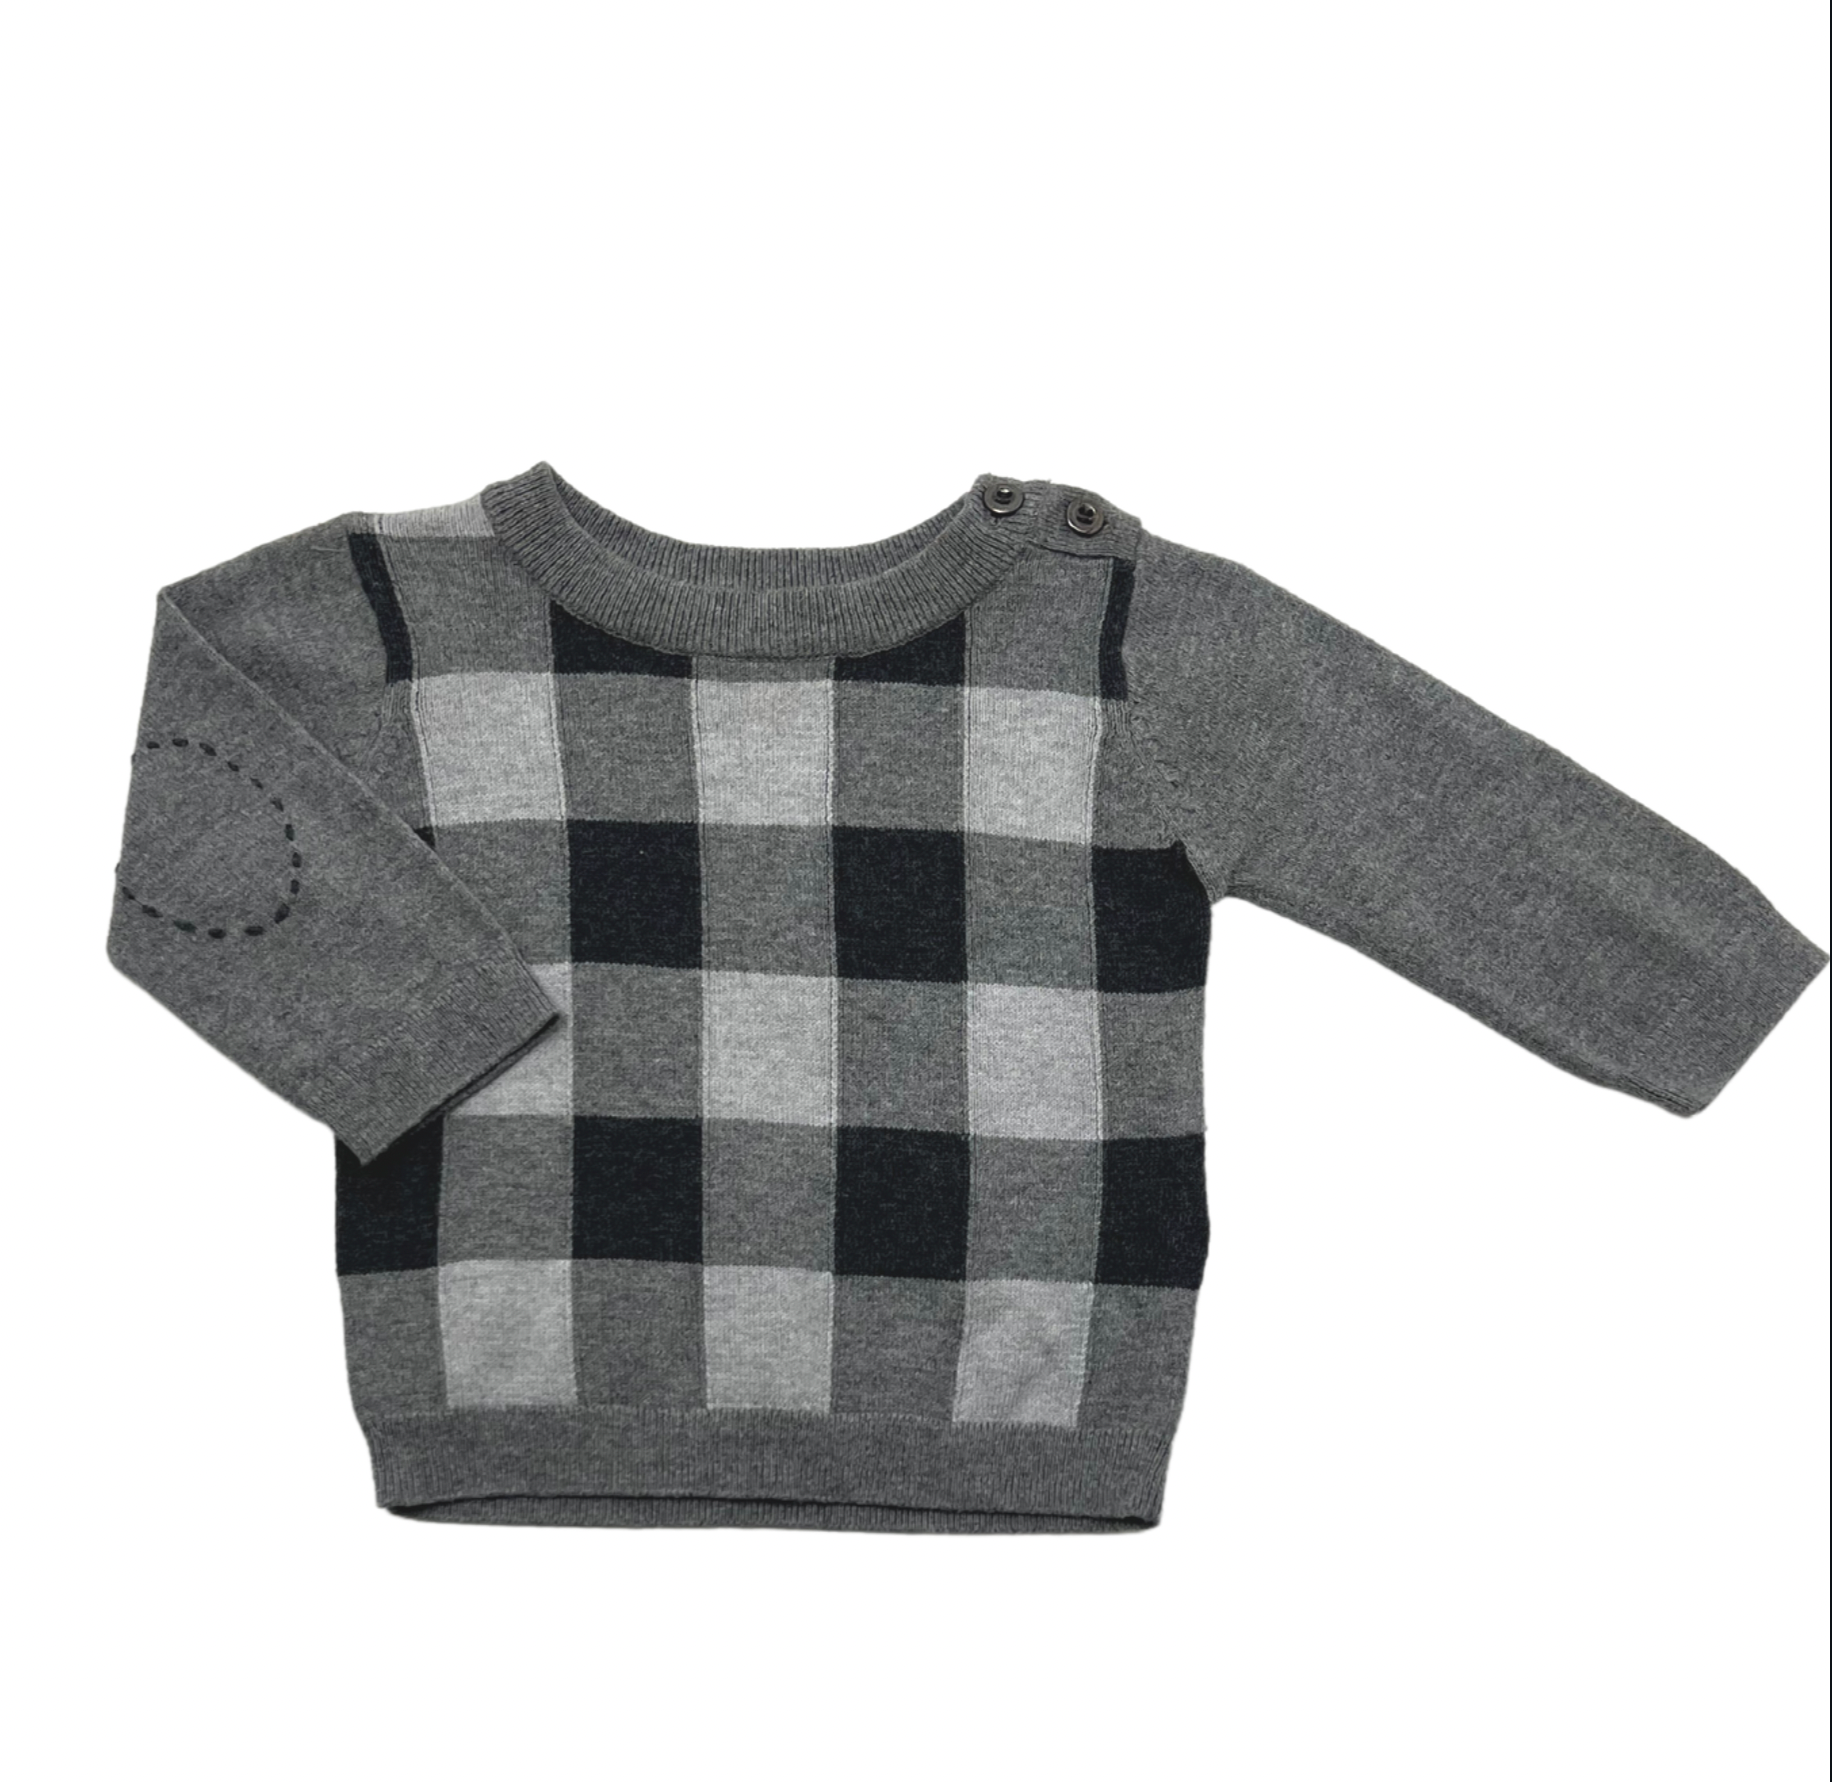 JACADI - Sweater - 6 months